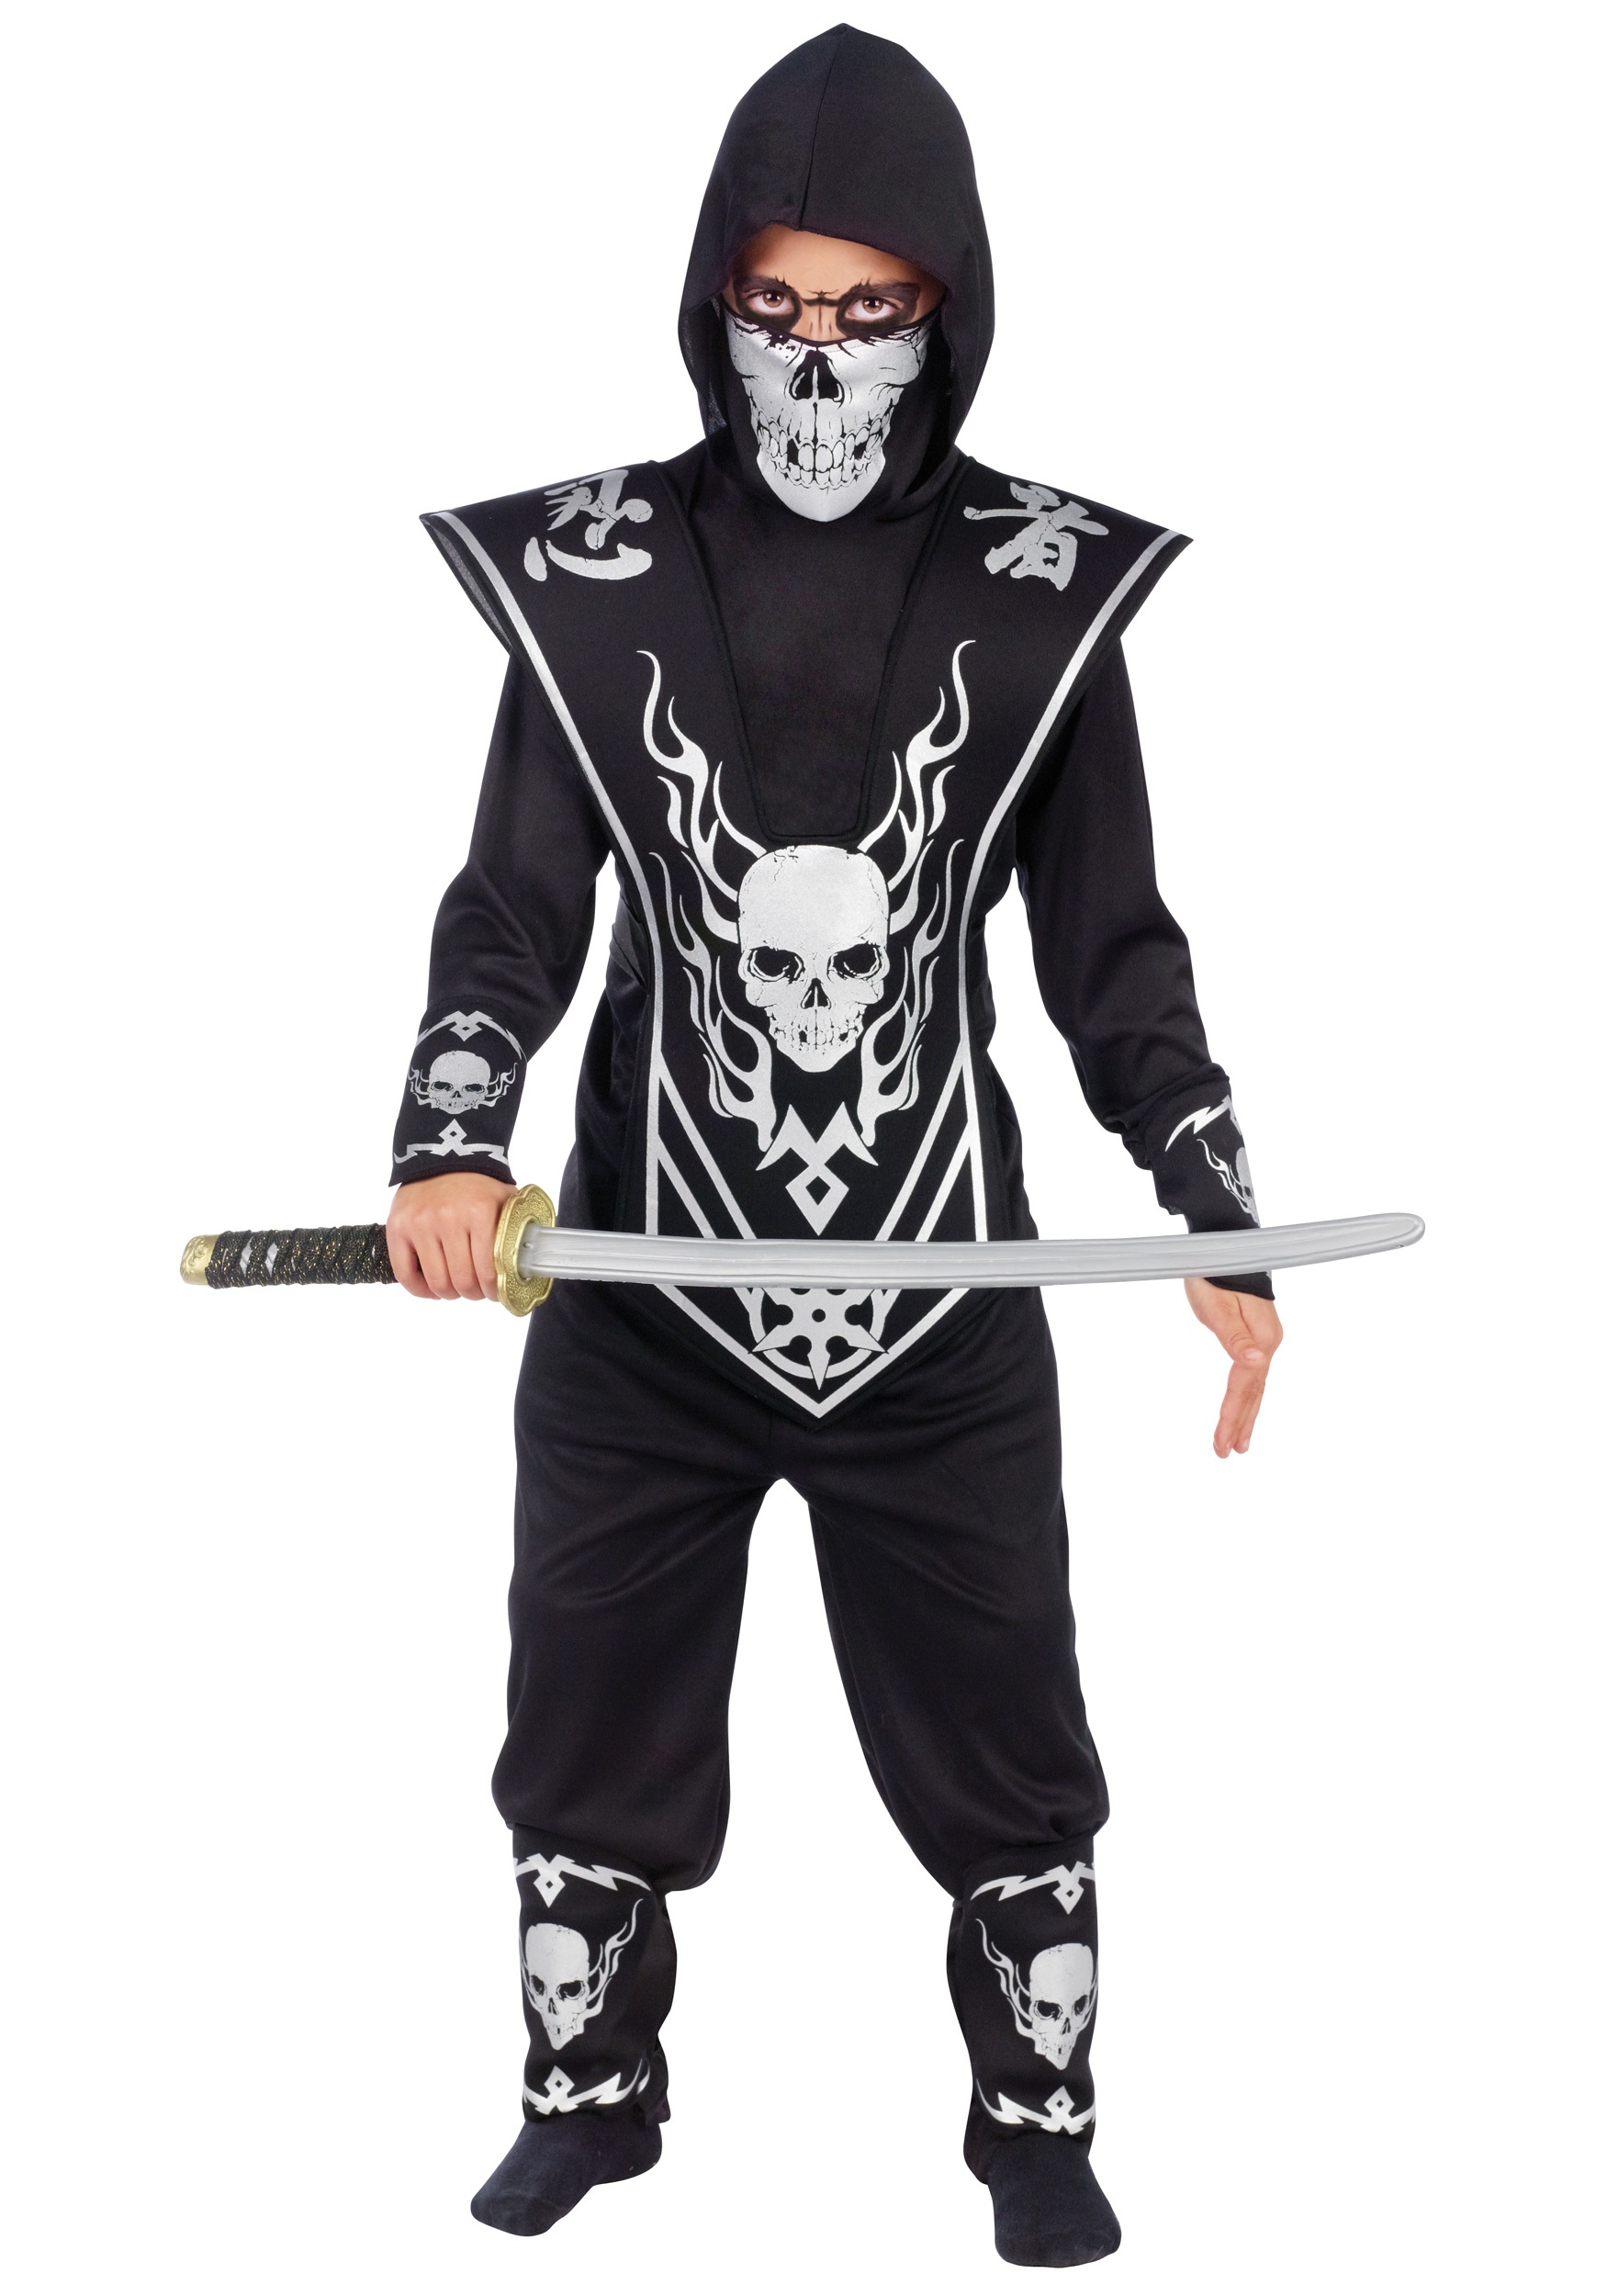 https://images.fun.com/products/4364/1-1/kids-ninja-skull-costume.jpg